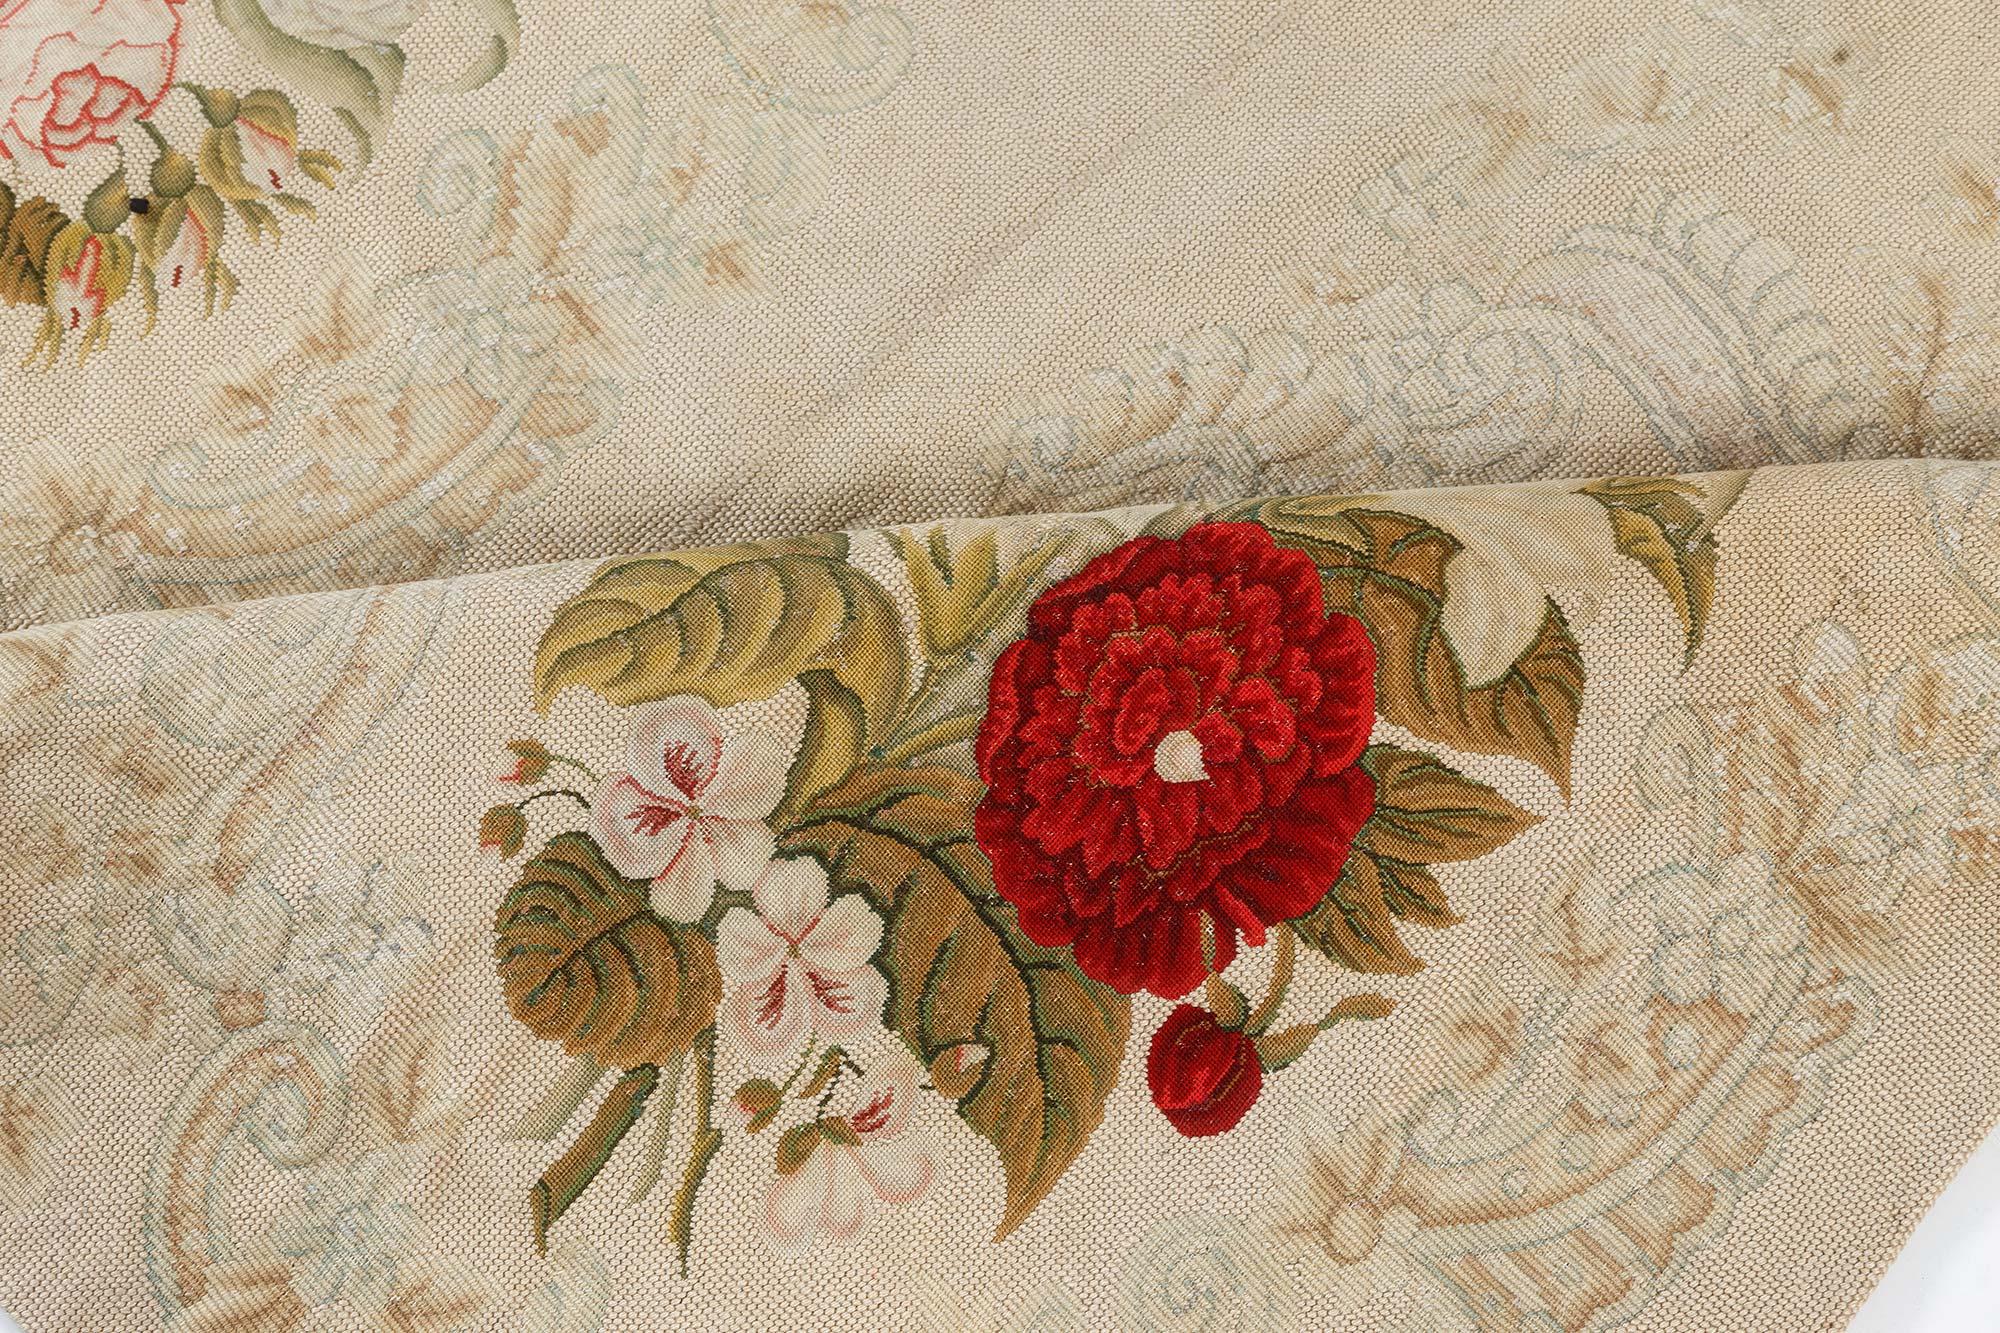 One-of-a-kind Antique Floral Needlework Carpet
Size: 7'2